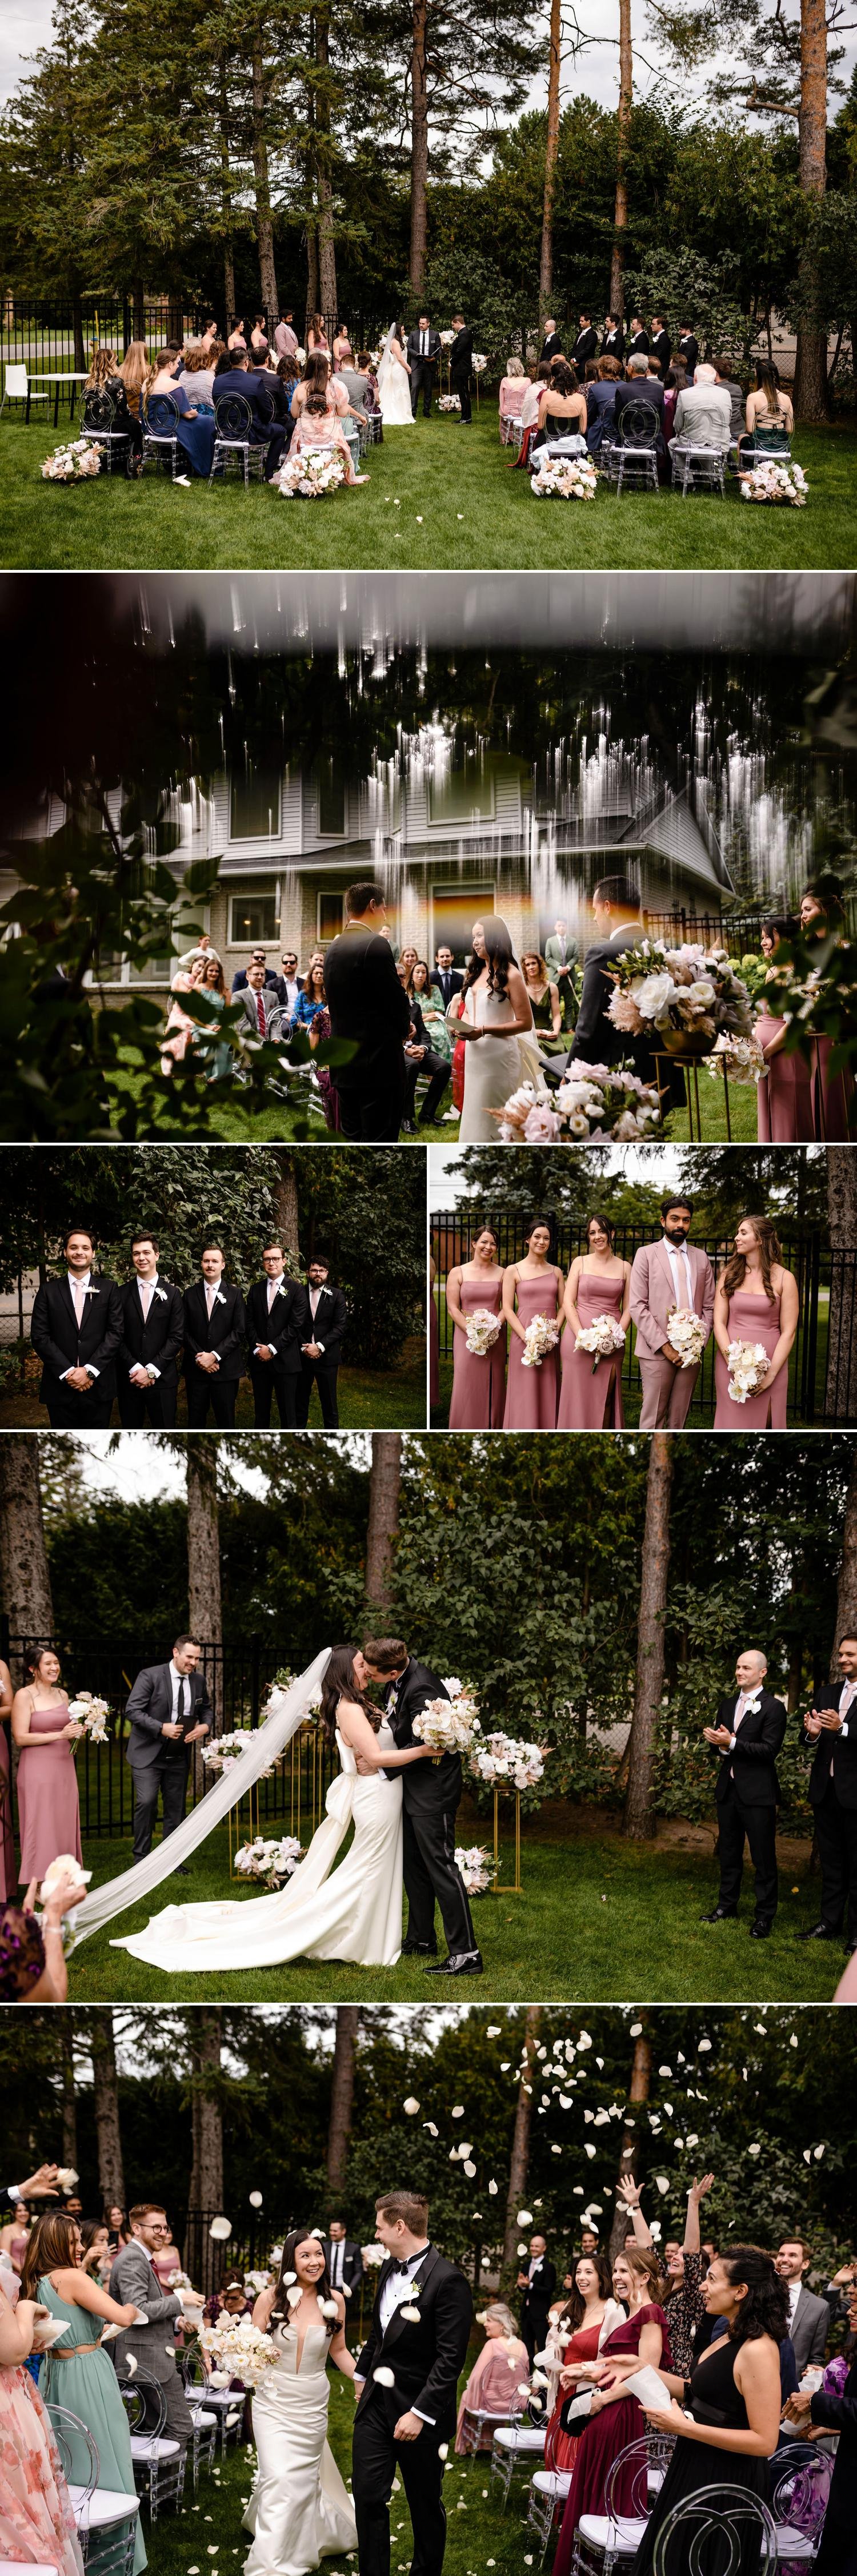 photographs from a backyard wedding ceremony in ottawa